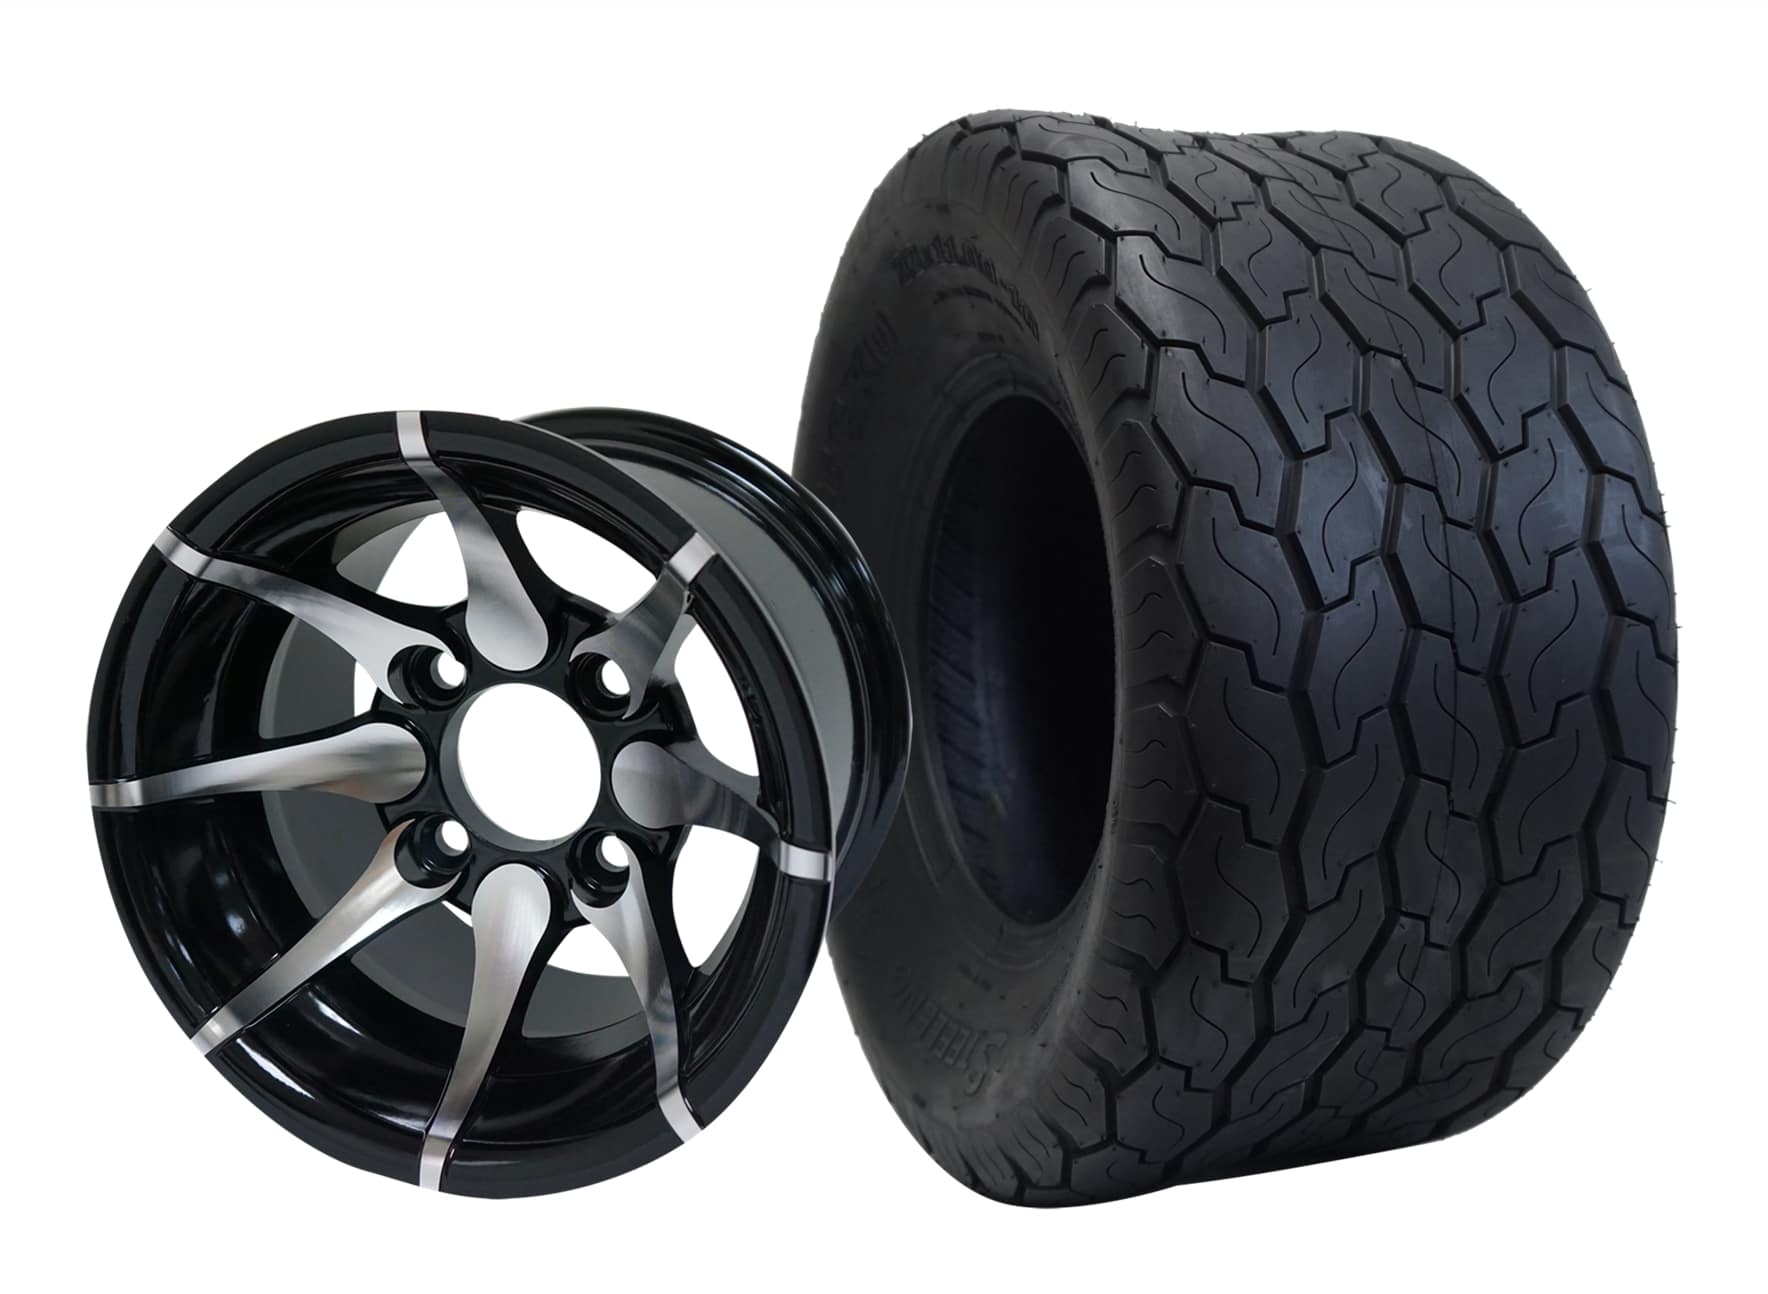 BNDL-TR1001-WH1005-CC0001-LN0001 10" Kraken Machined Black Wheel Aluminum Alloy & 18"x9"-10" Gecko All Terrain Tire x4